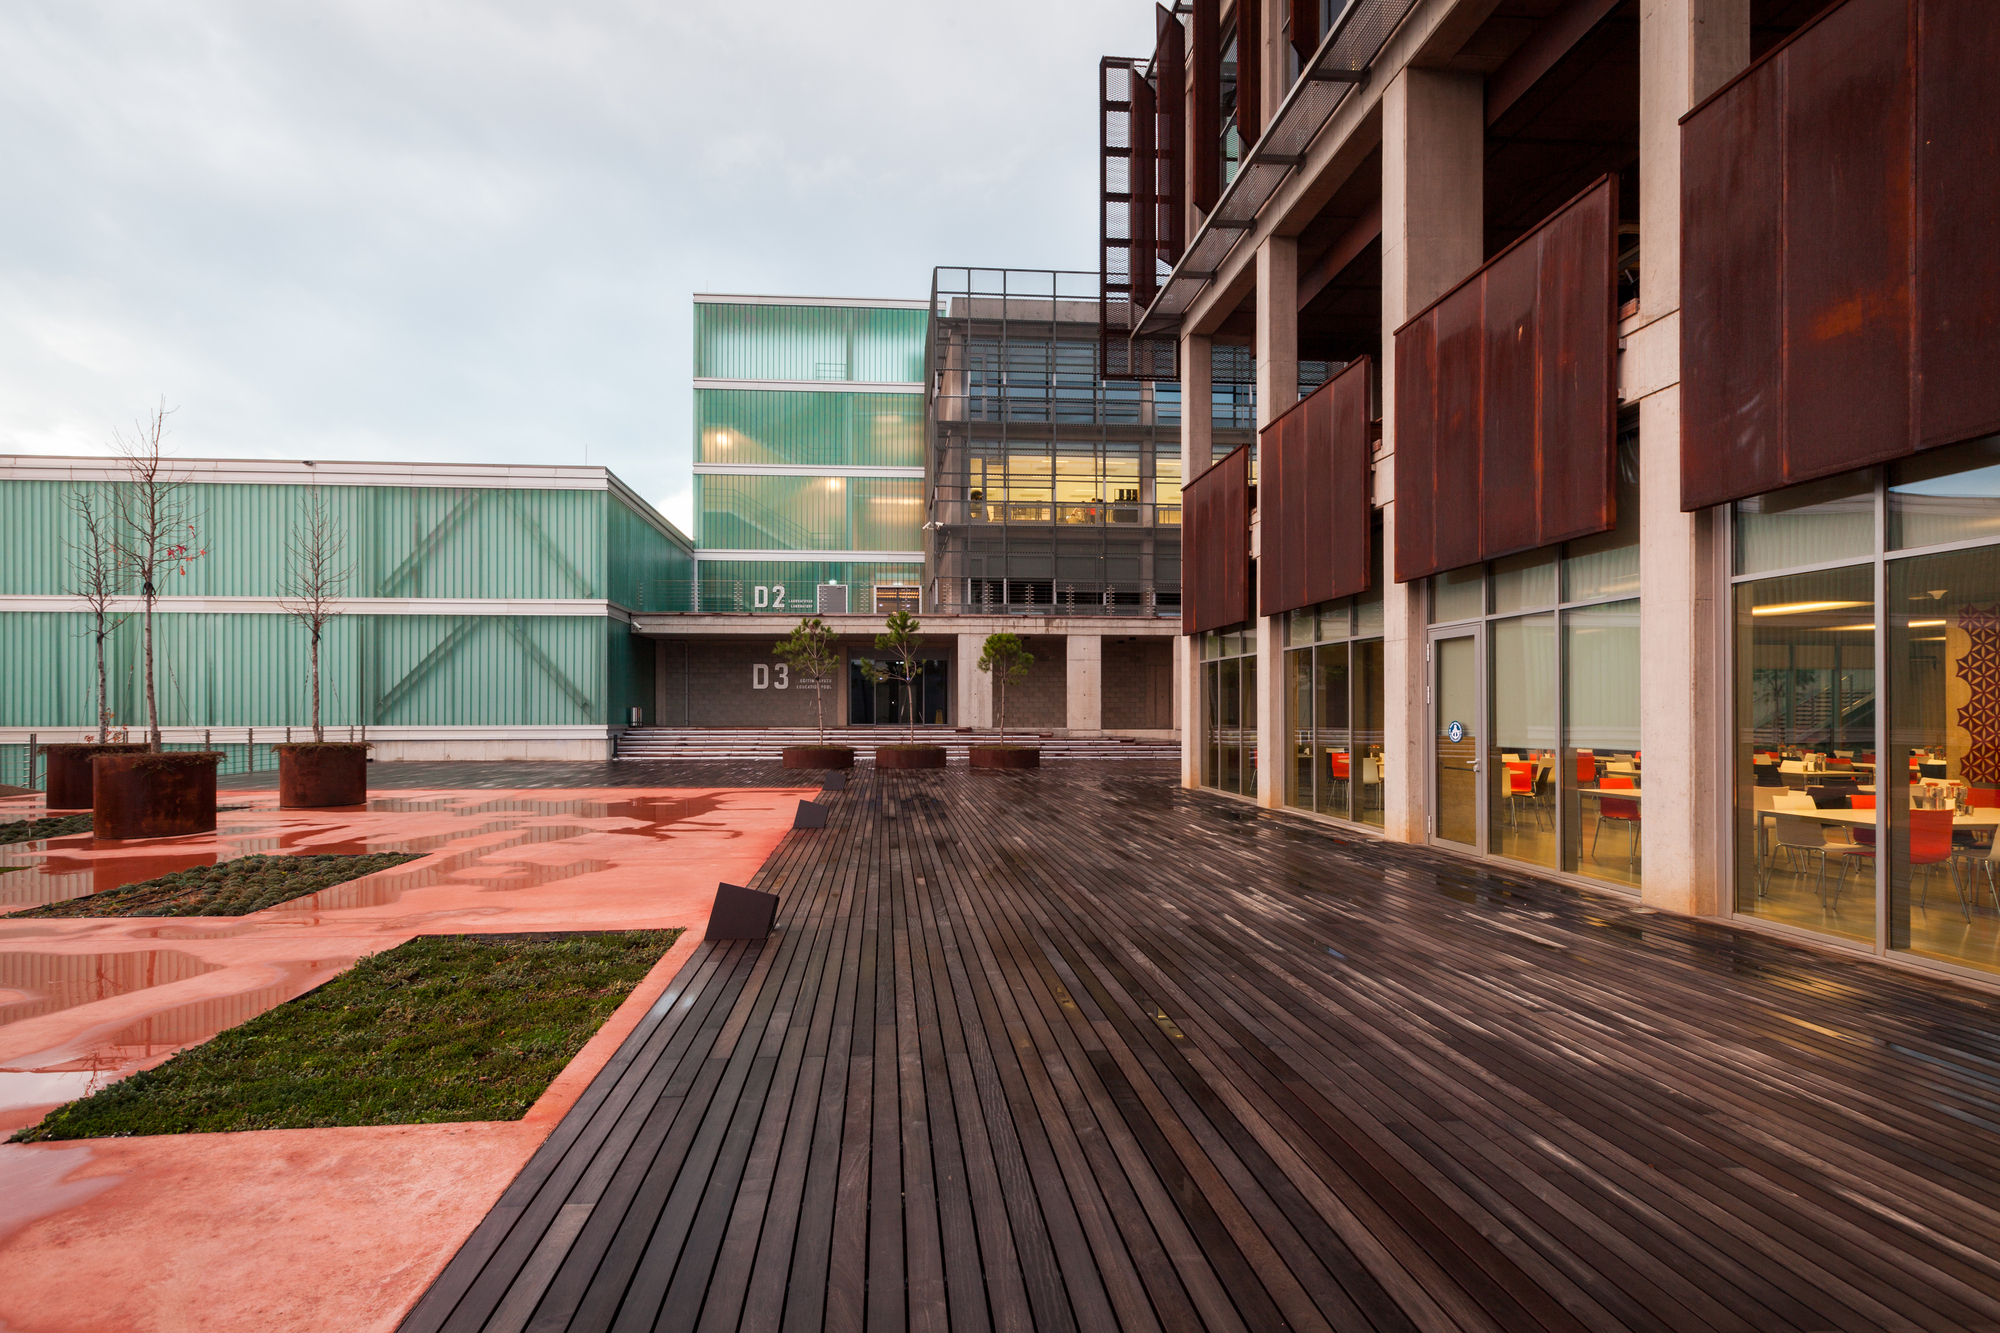 terrasse-en-bois-exotic-ipe-_piri-reis-maritime-university-kreatif-architects